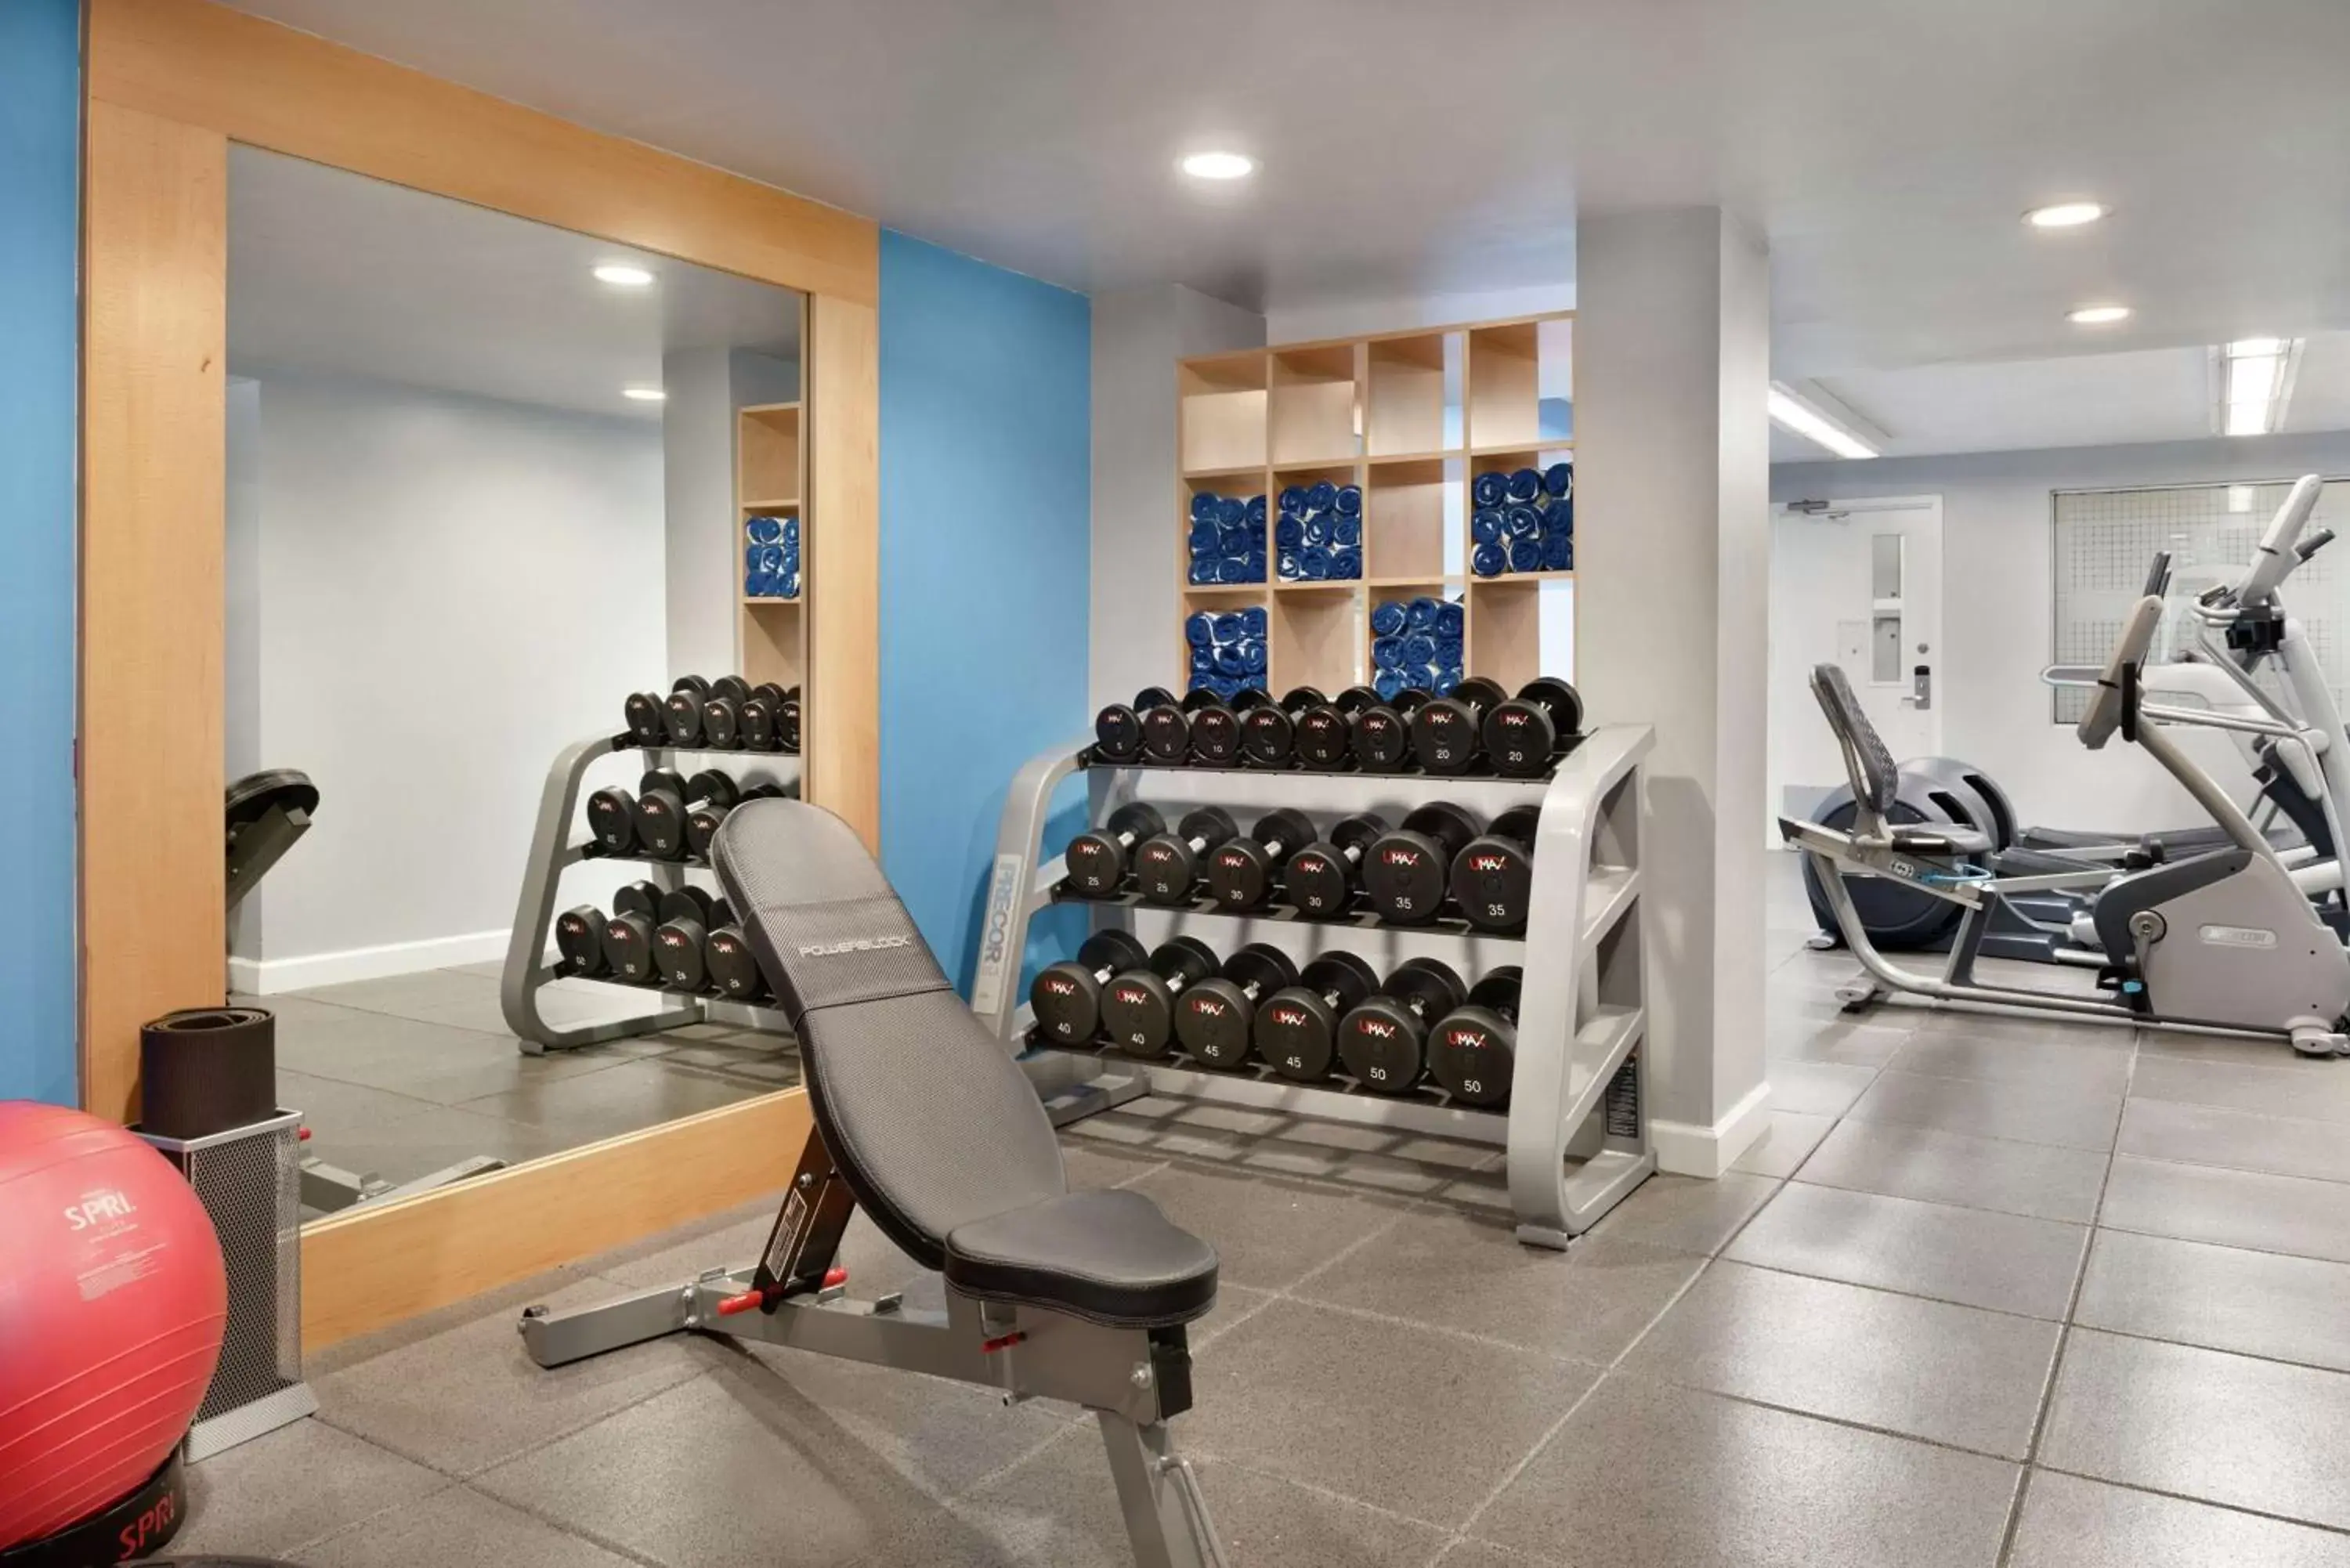 Fitness centre/facilities, Fitness Center/Facilities in Embassy Suites Cincinnati - RiverCenter